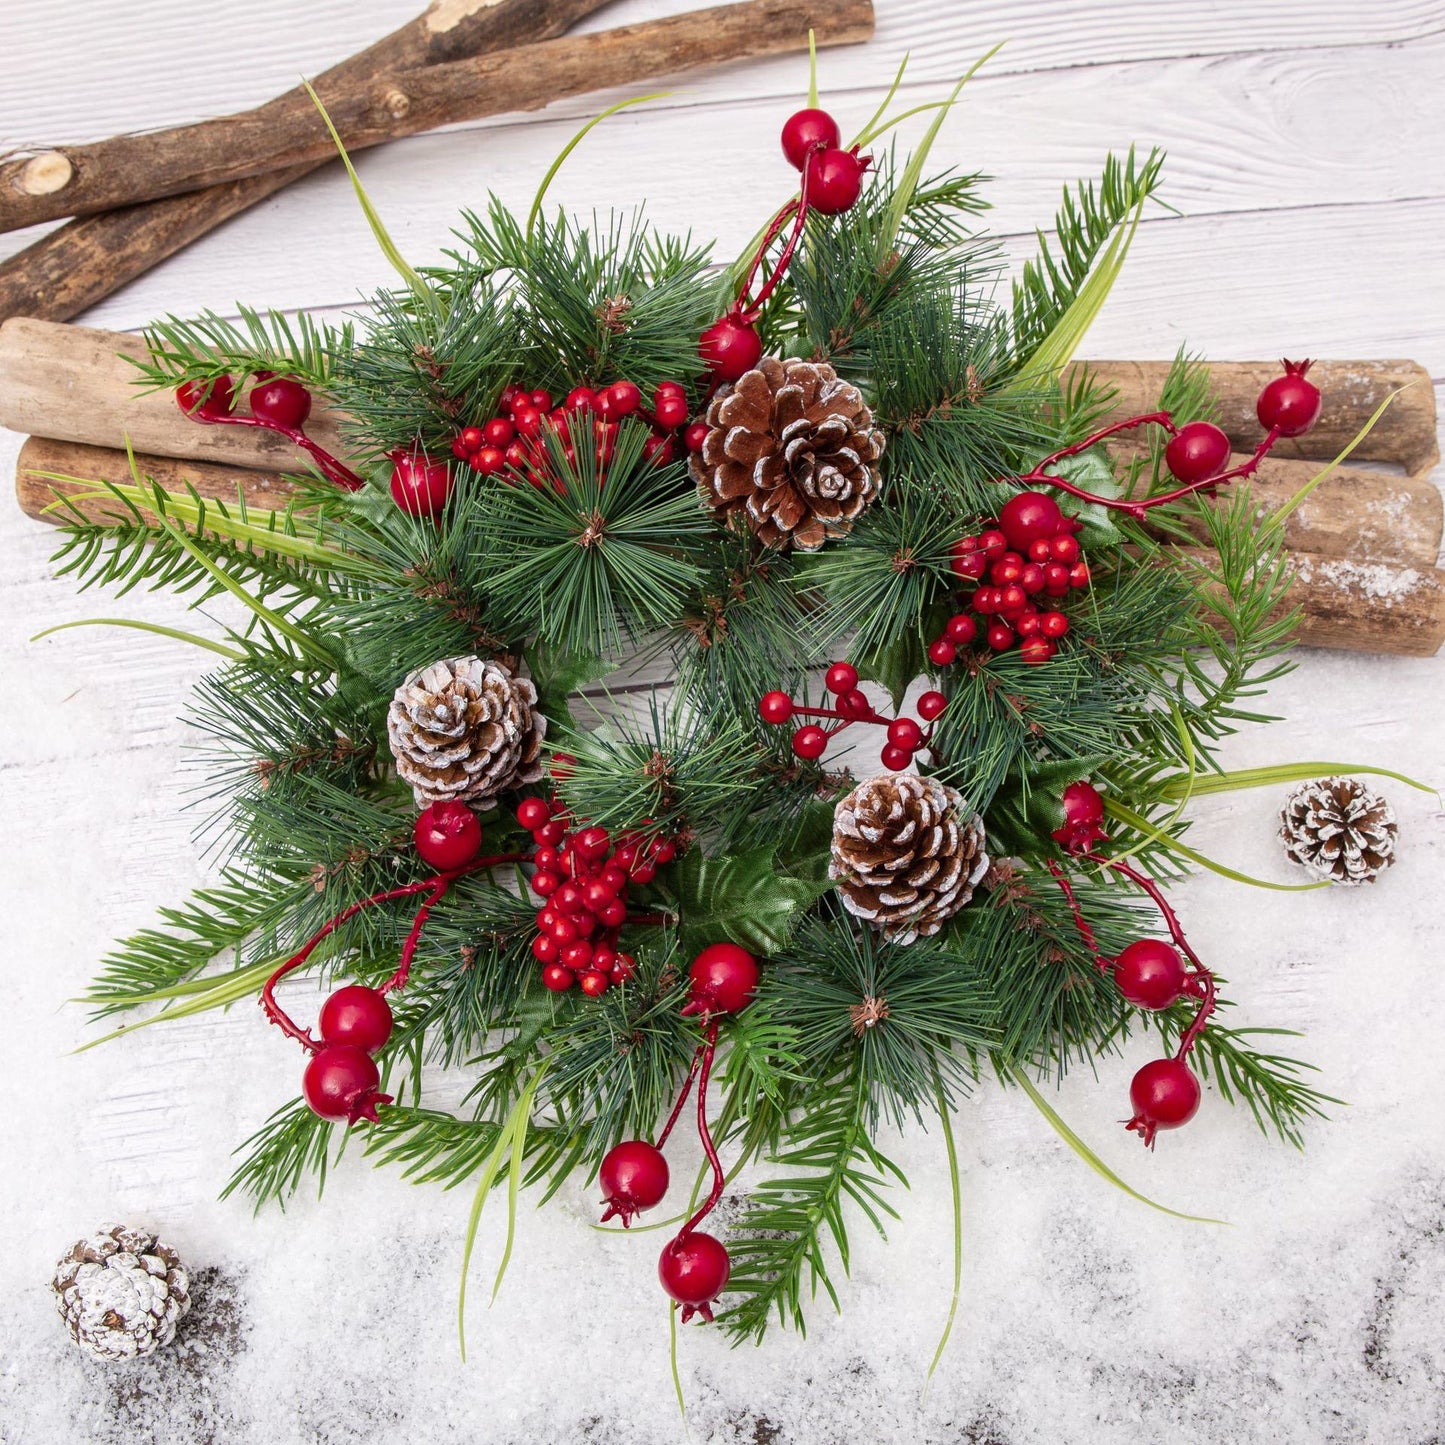 Christmas Wreath Festive Christmas Rattan Venue Layout Props Wreath Decorations Door Hanging